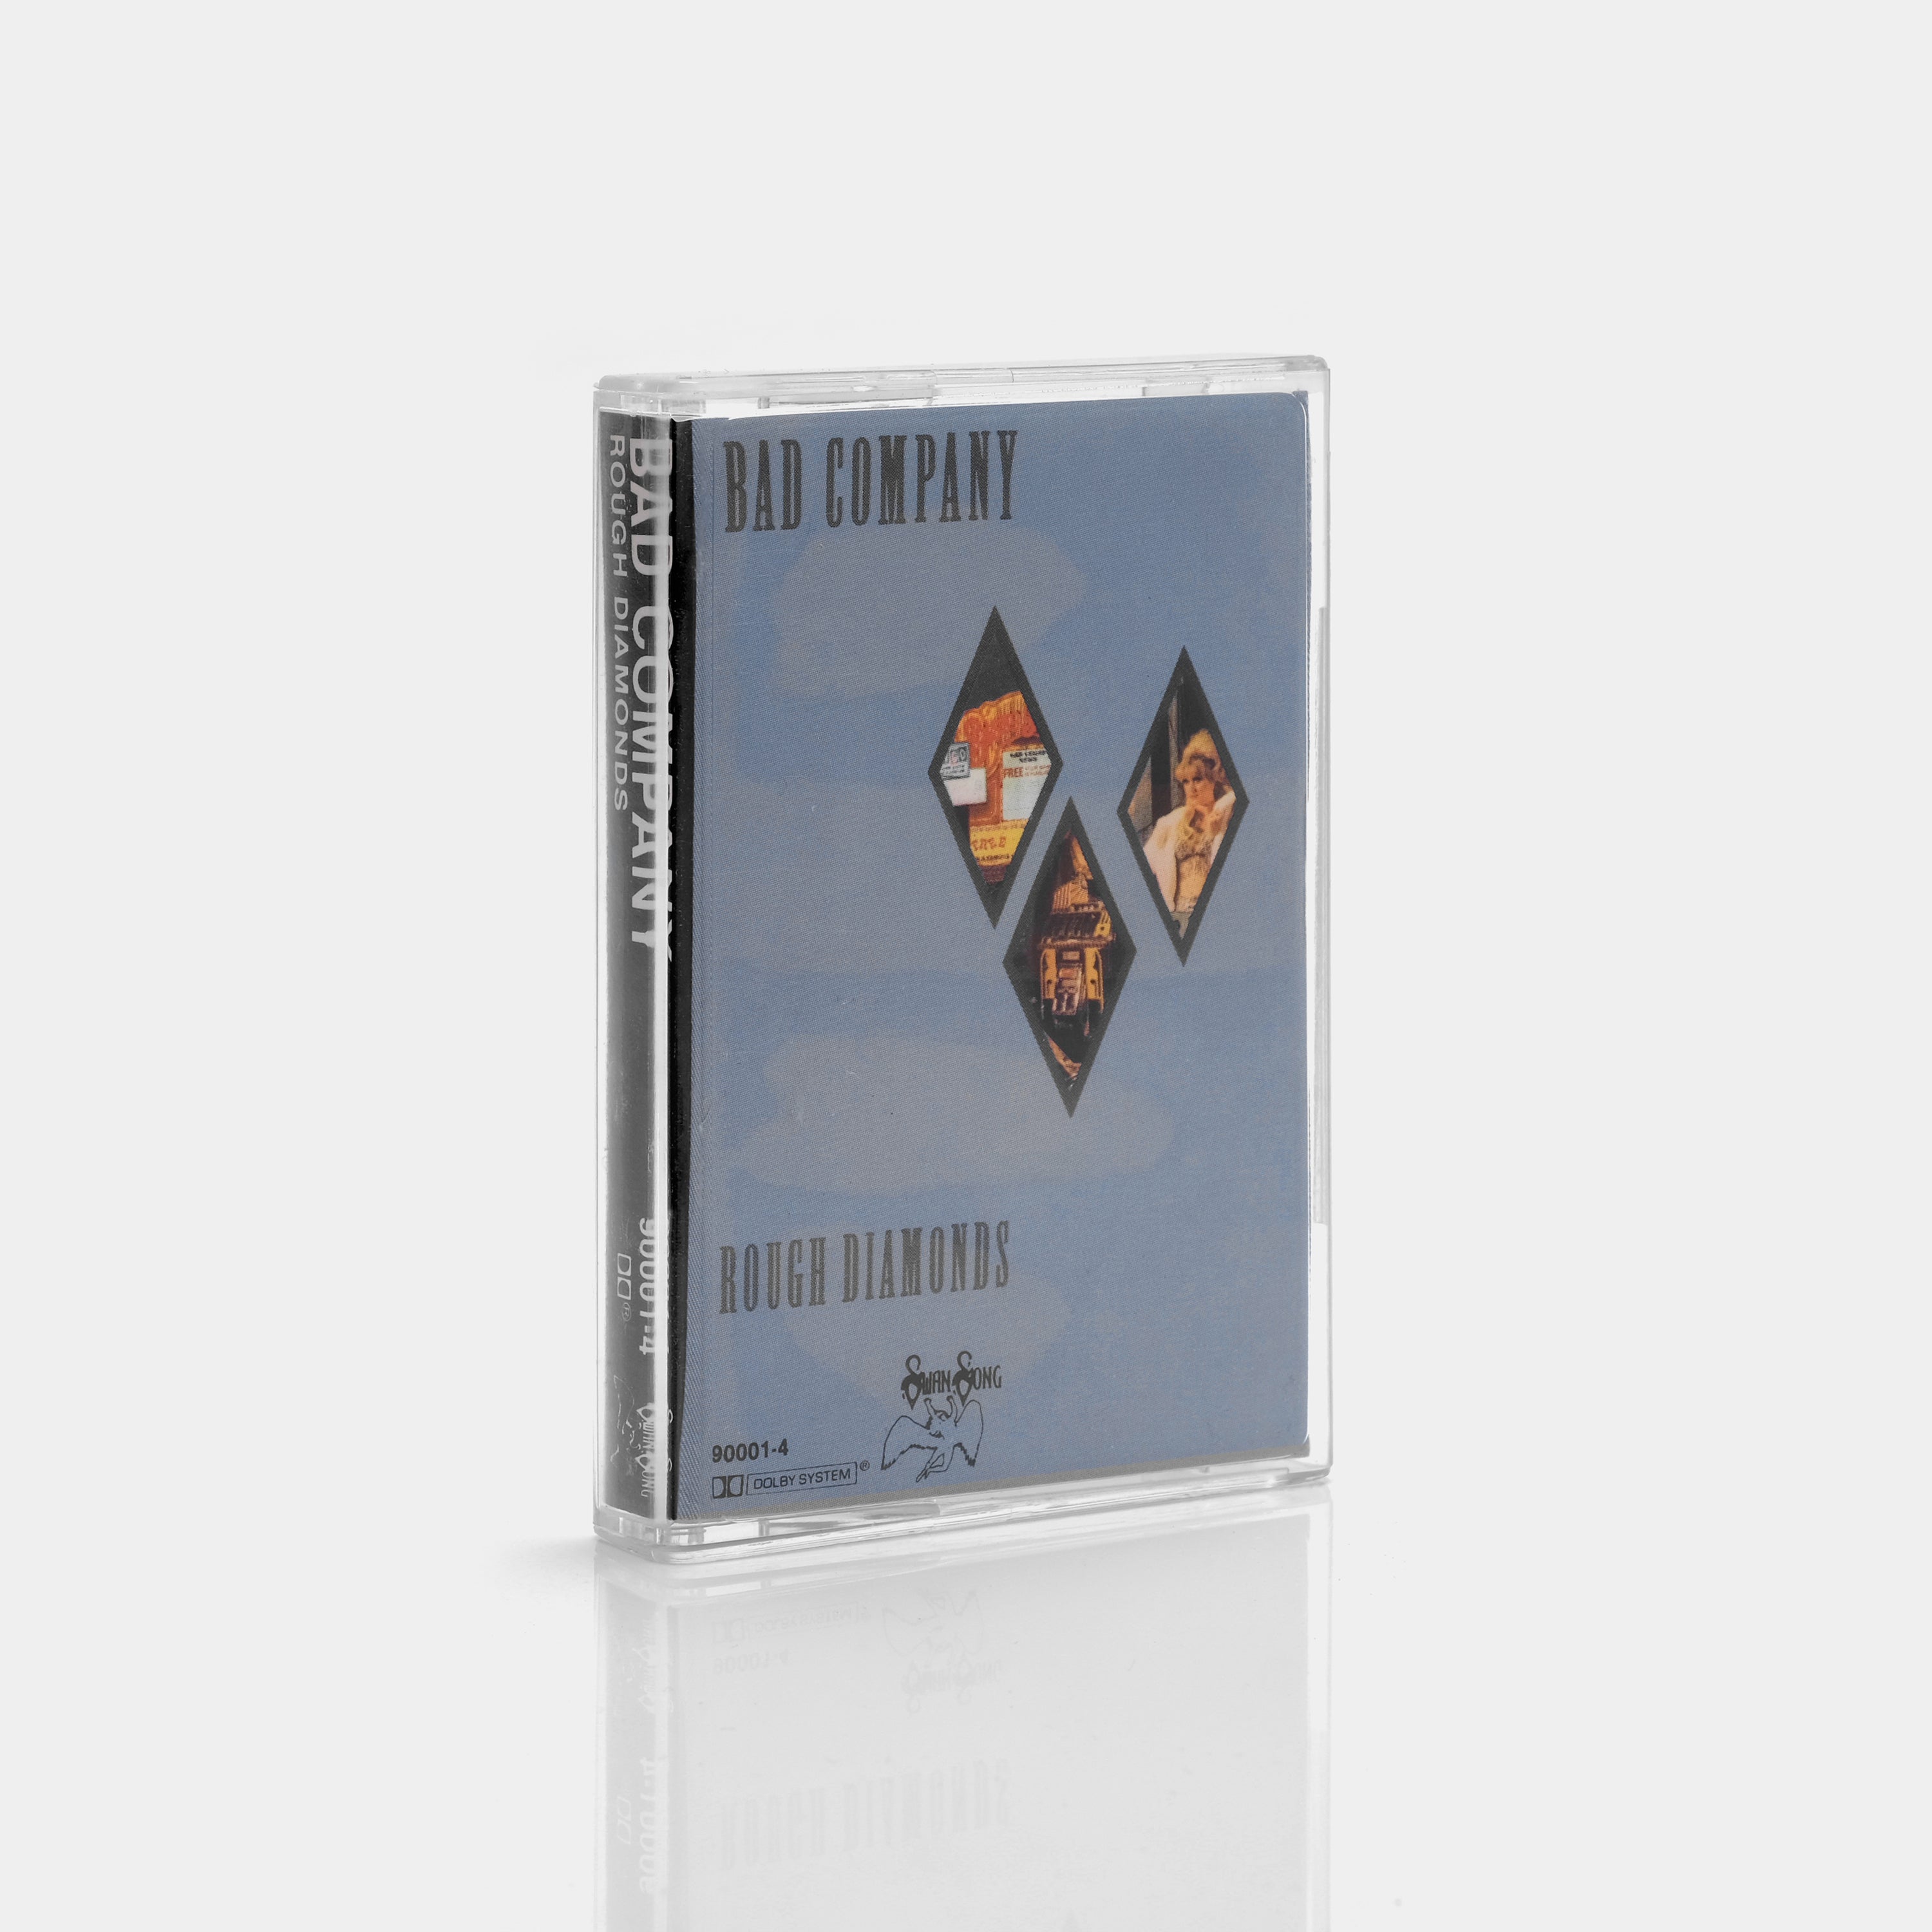 Bad Company - Rough Diamonds Cassette Tape